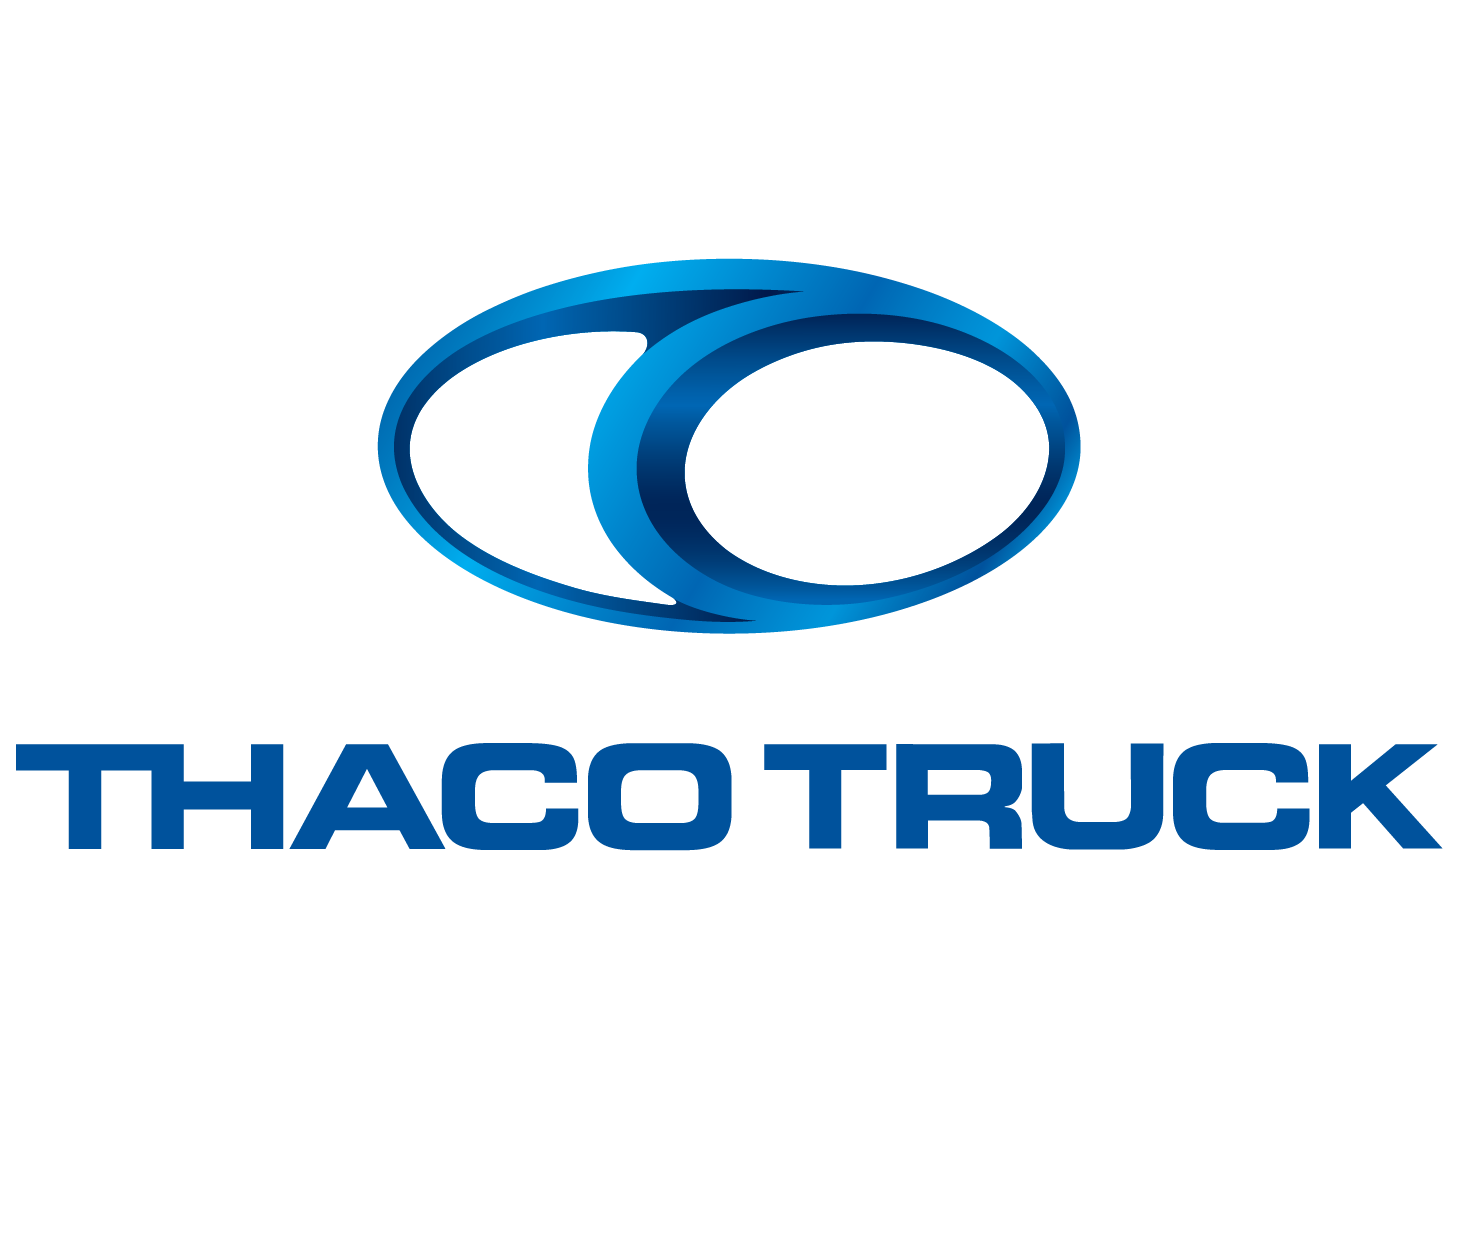 Thaco Truck